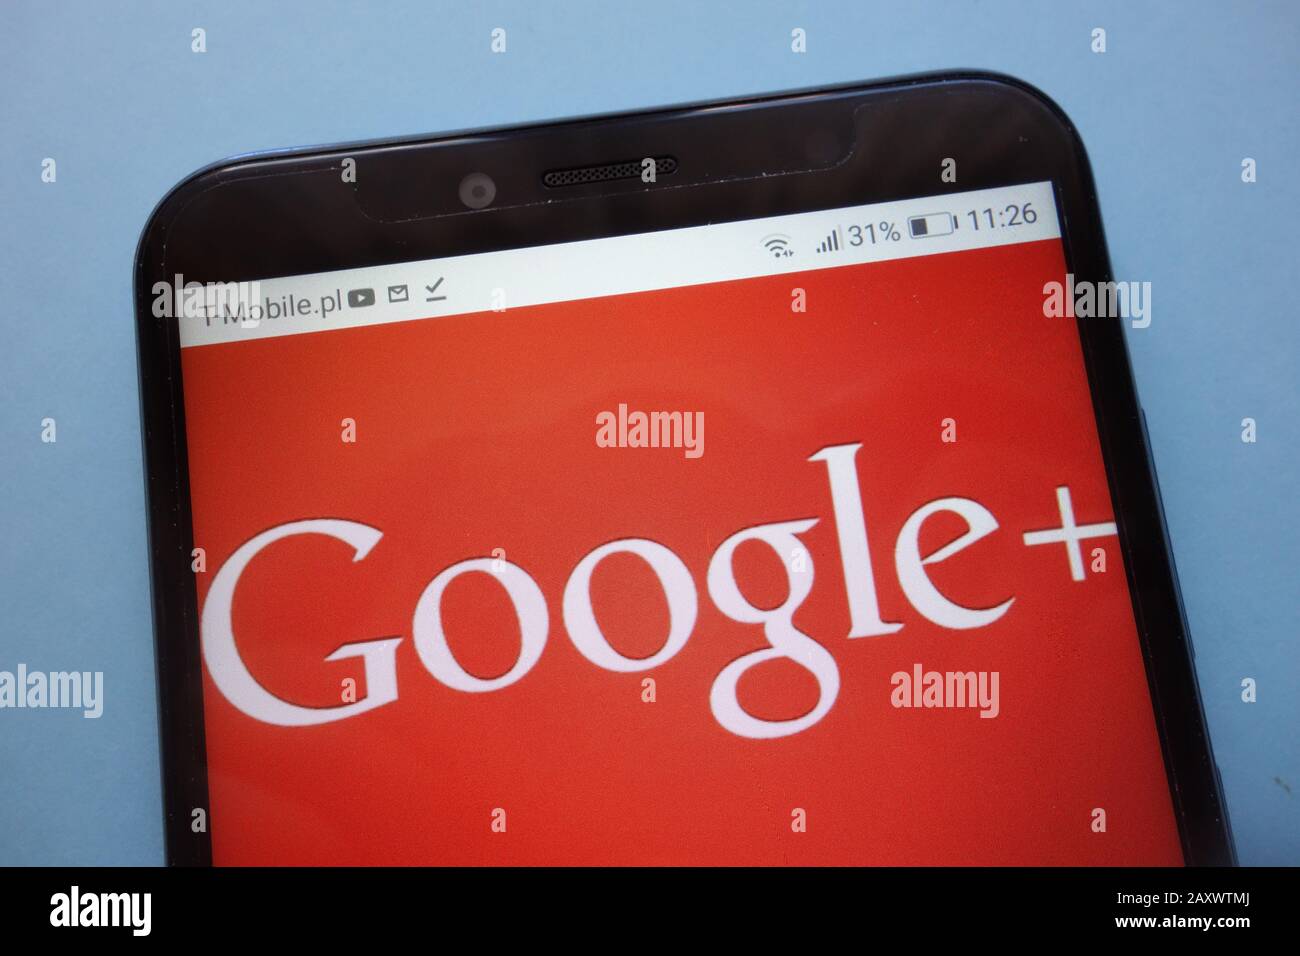 Google Plus (Google+) logo displayed on smartphone Stock Photo